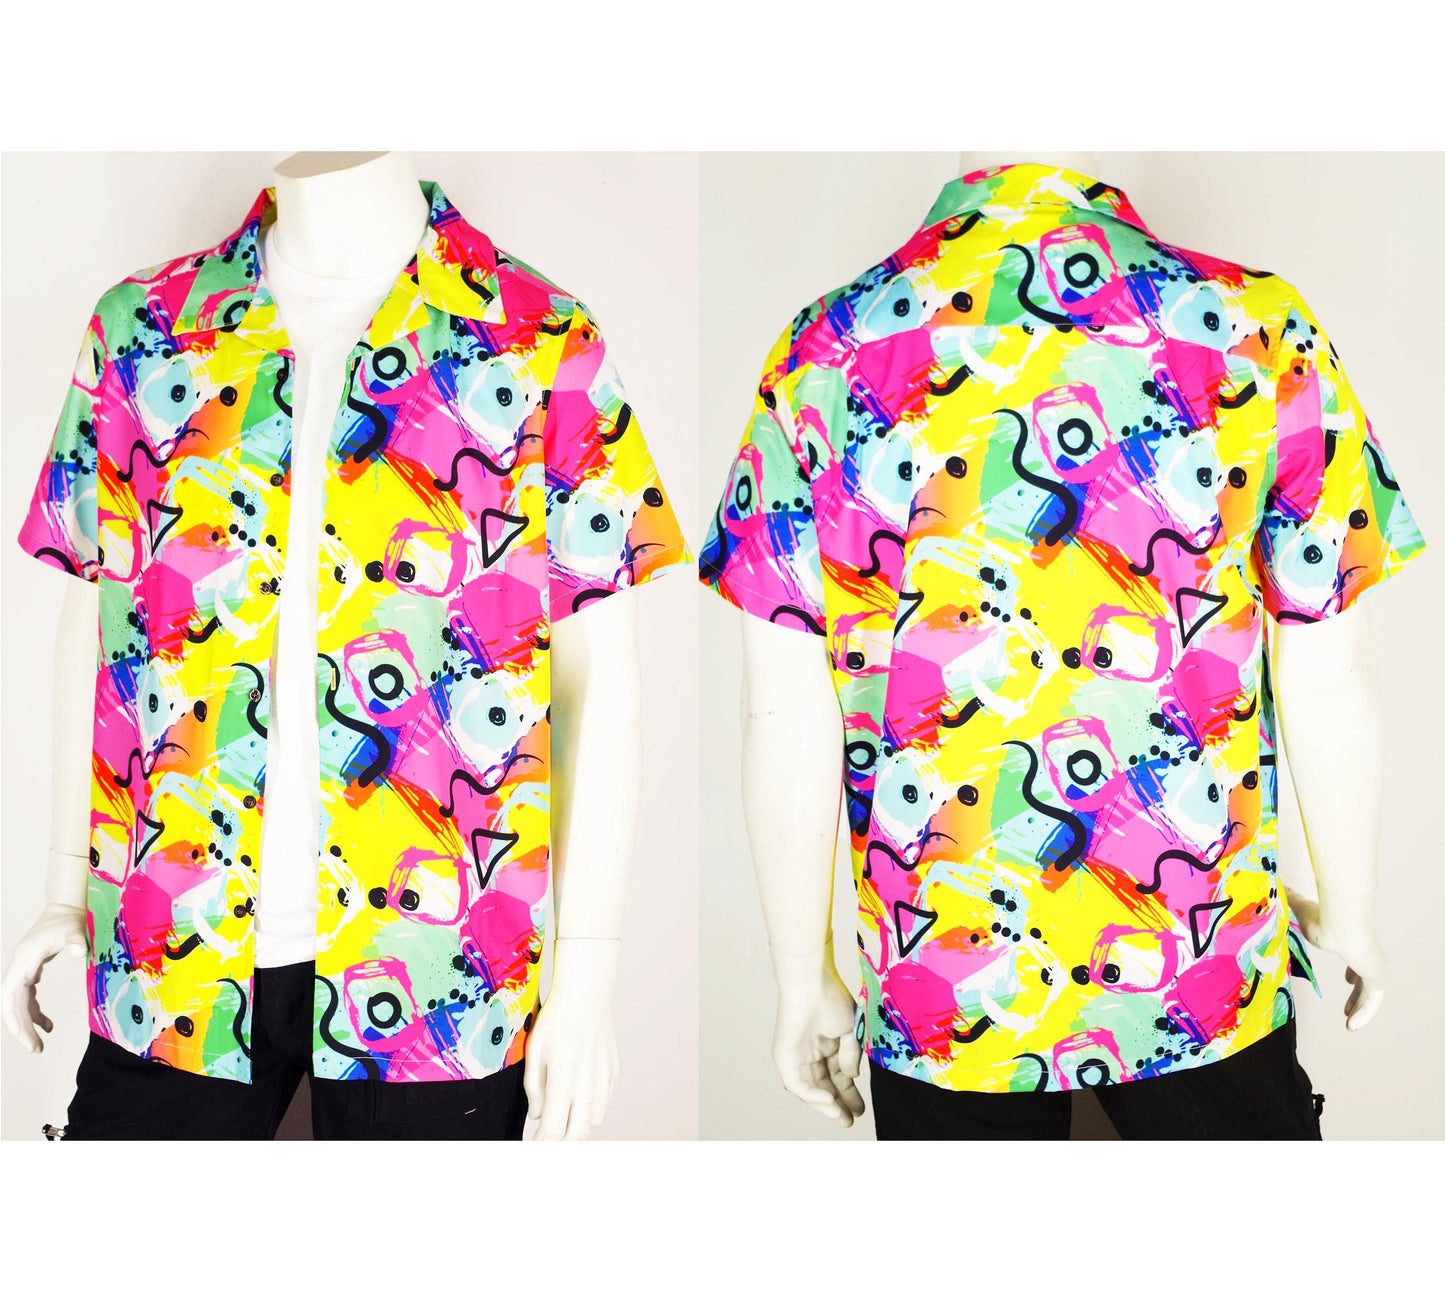 Festival Button Up Shirt in Memphis Splash Bold Colourful Print